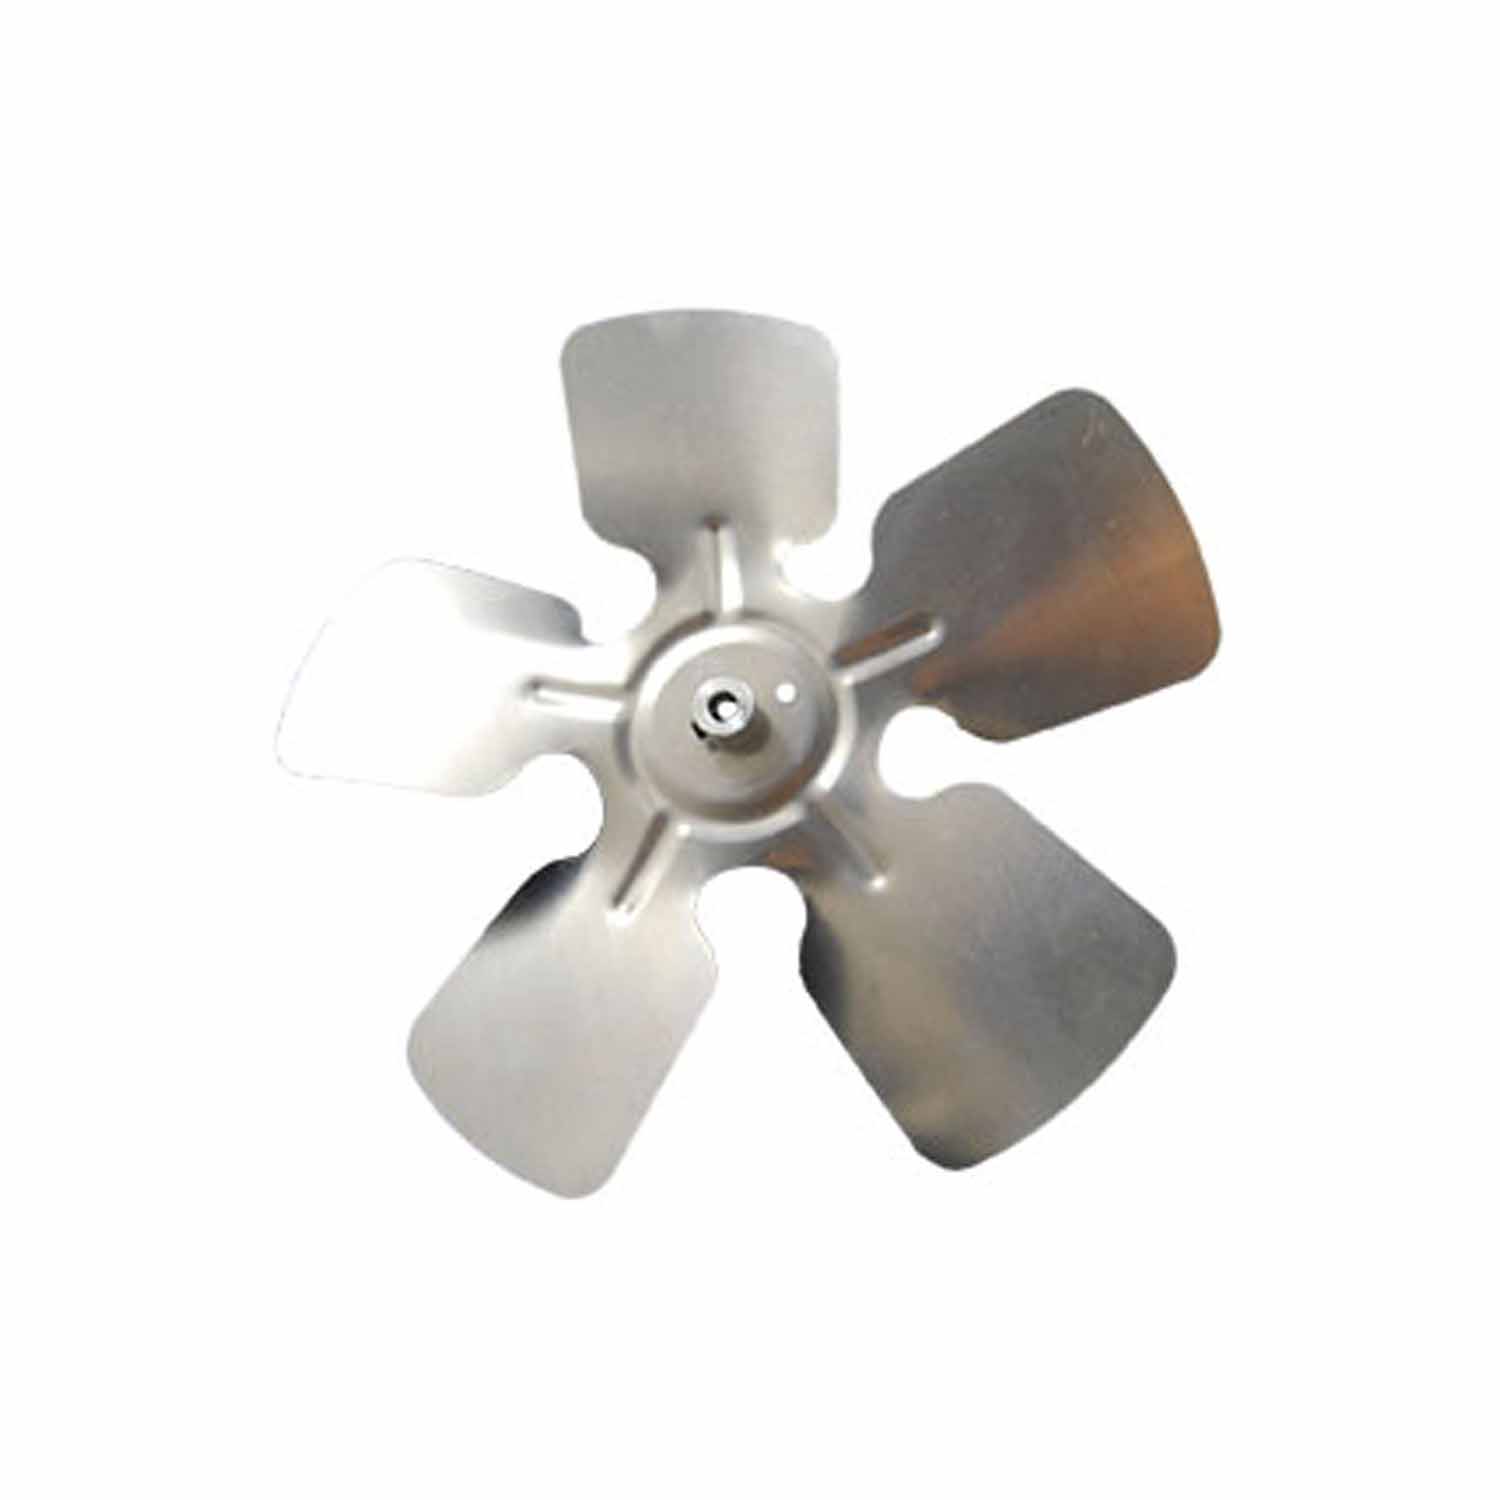 Aluminum Fan Blade, 5 Blade, 5-1/2" Dia., CW, 1/4" Bore, Hub on Intake